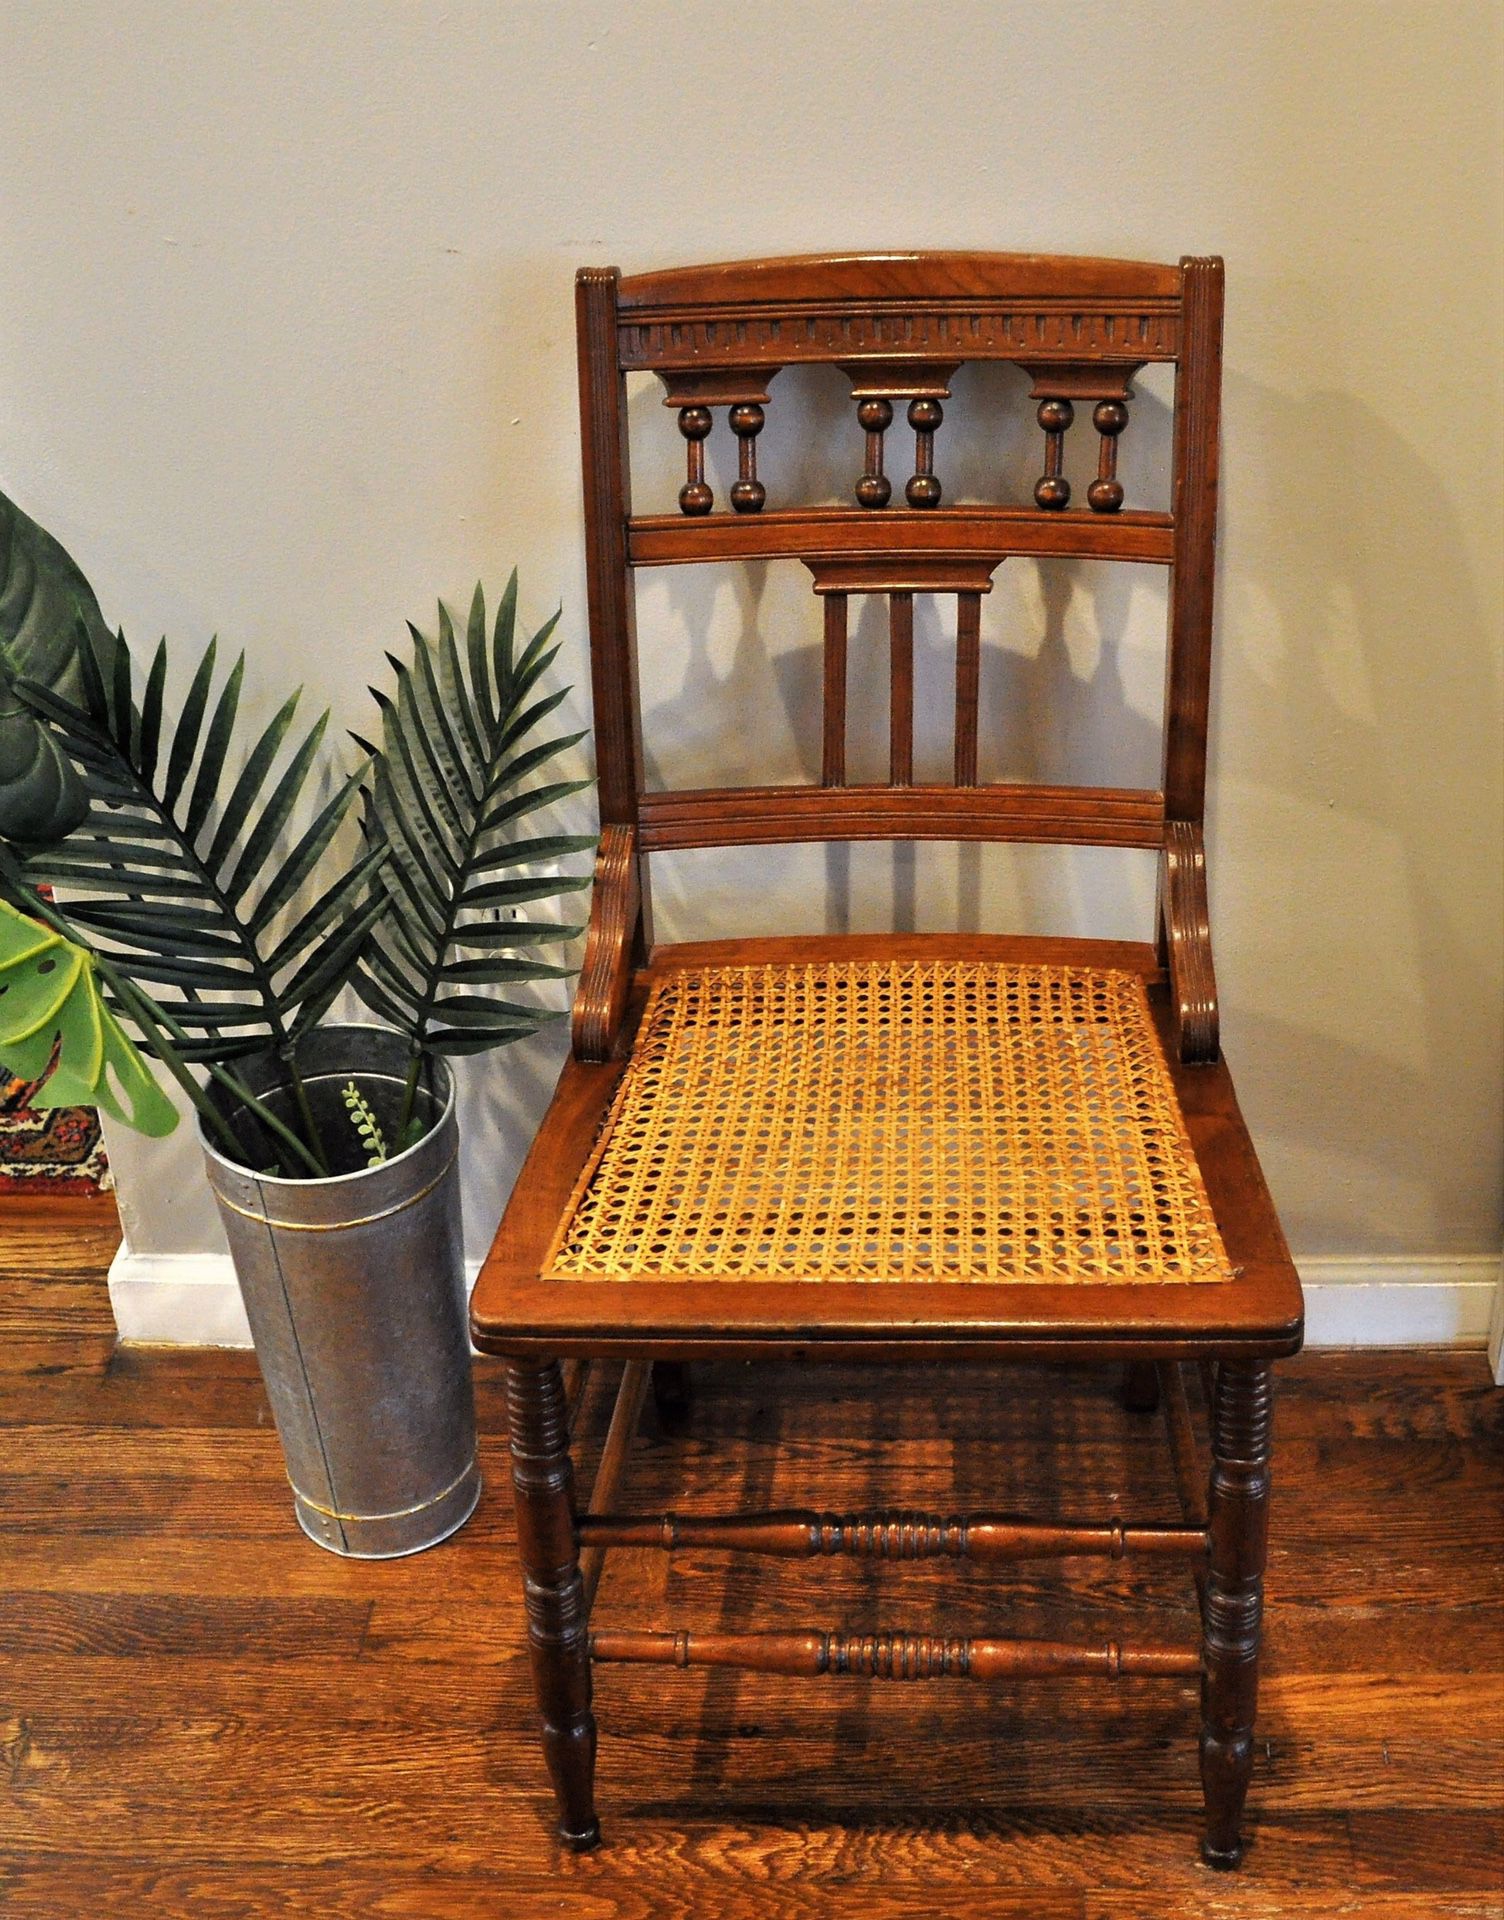 Vintage wood/cane chair